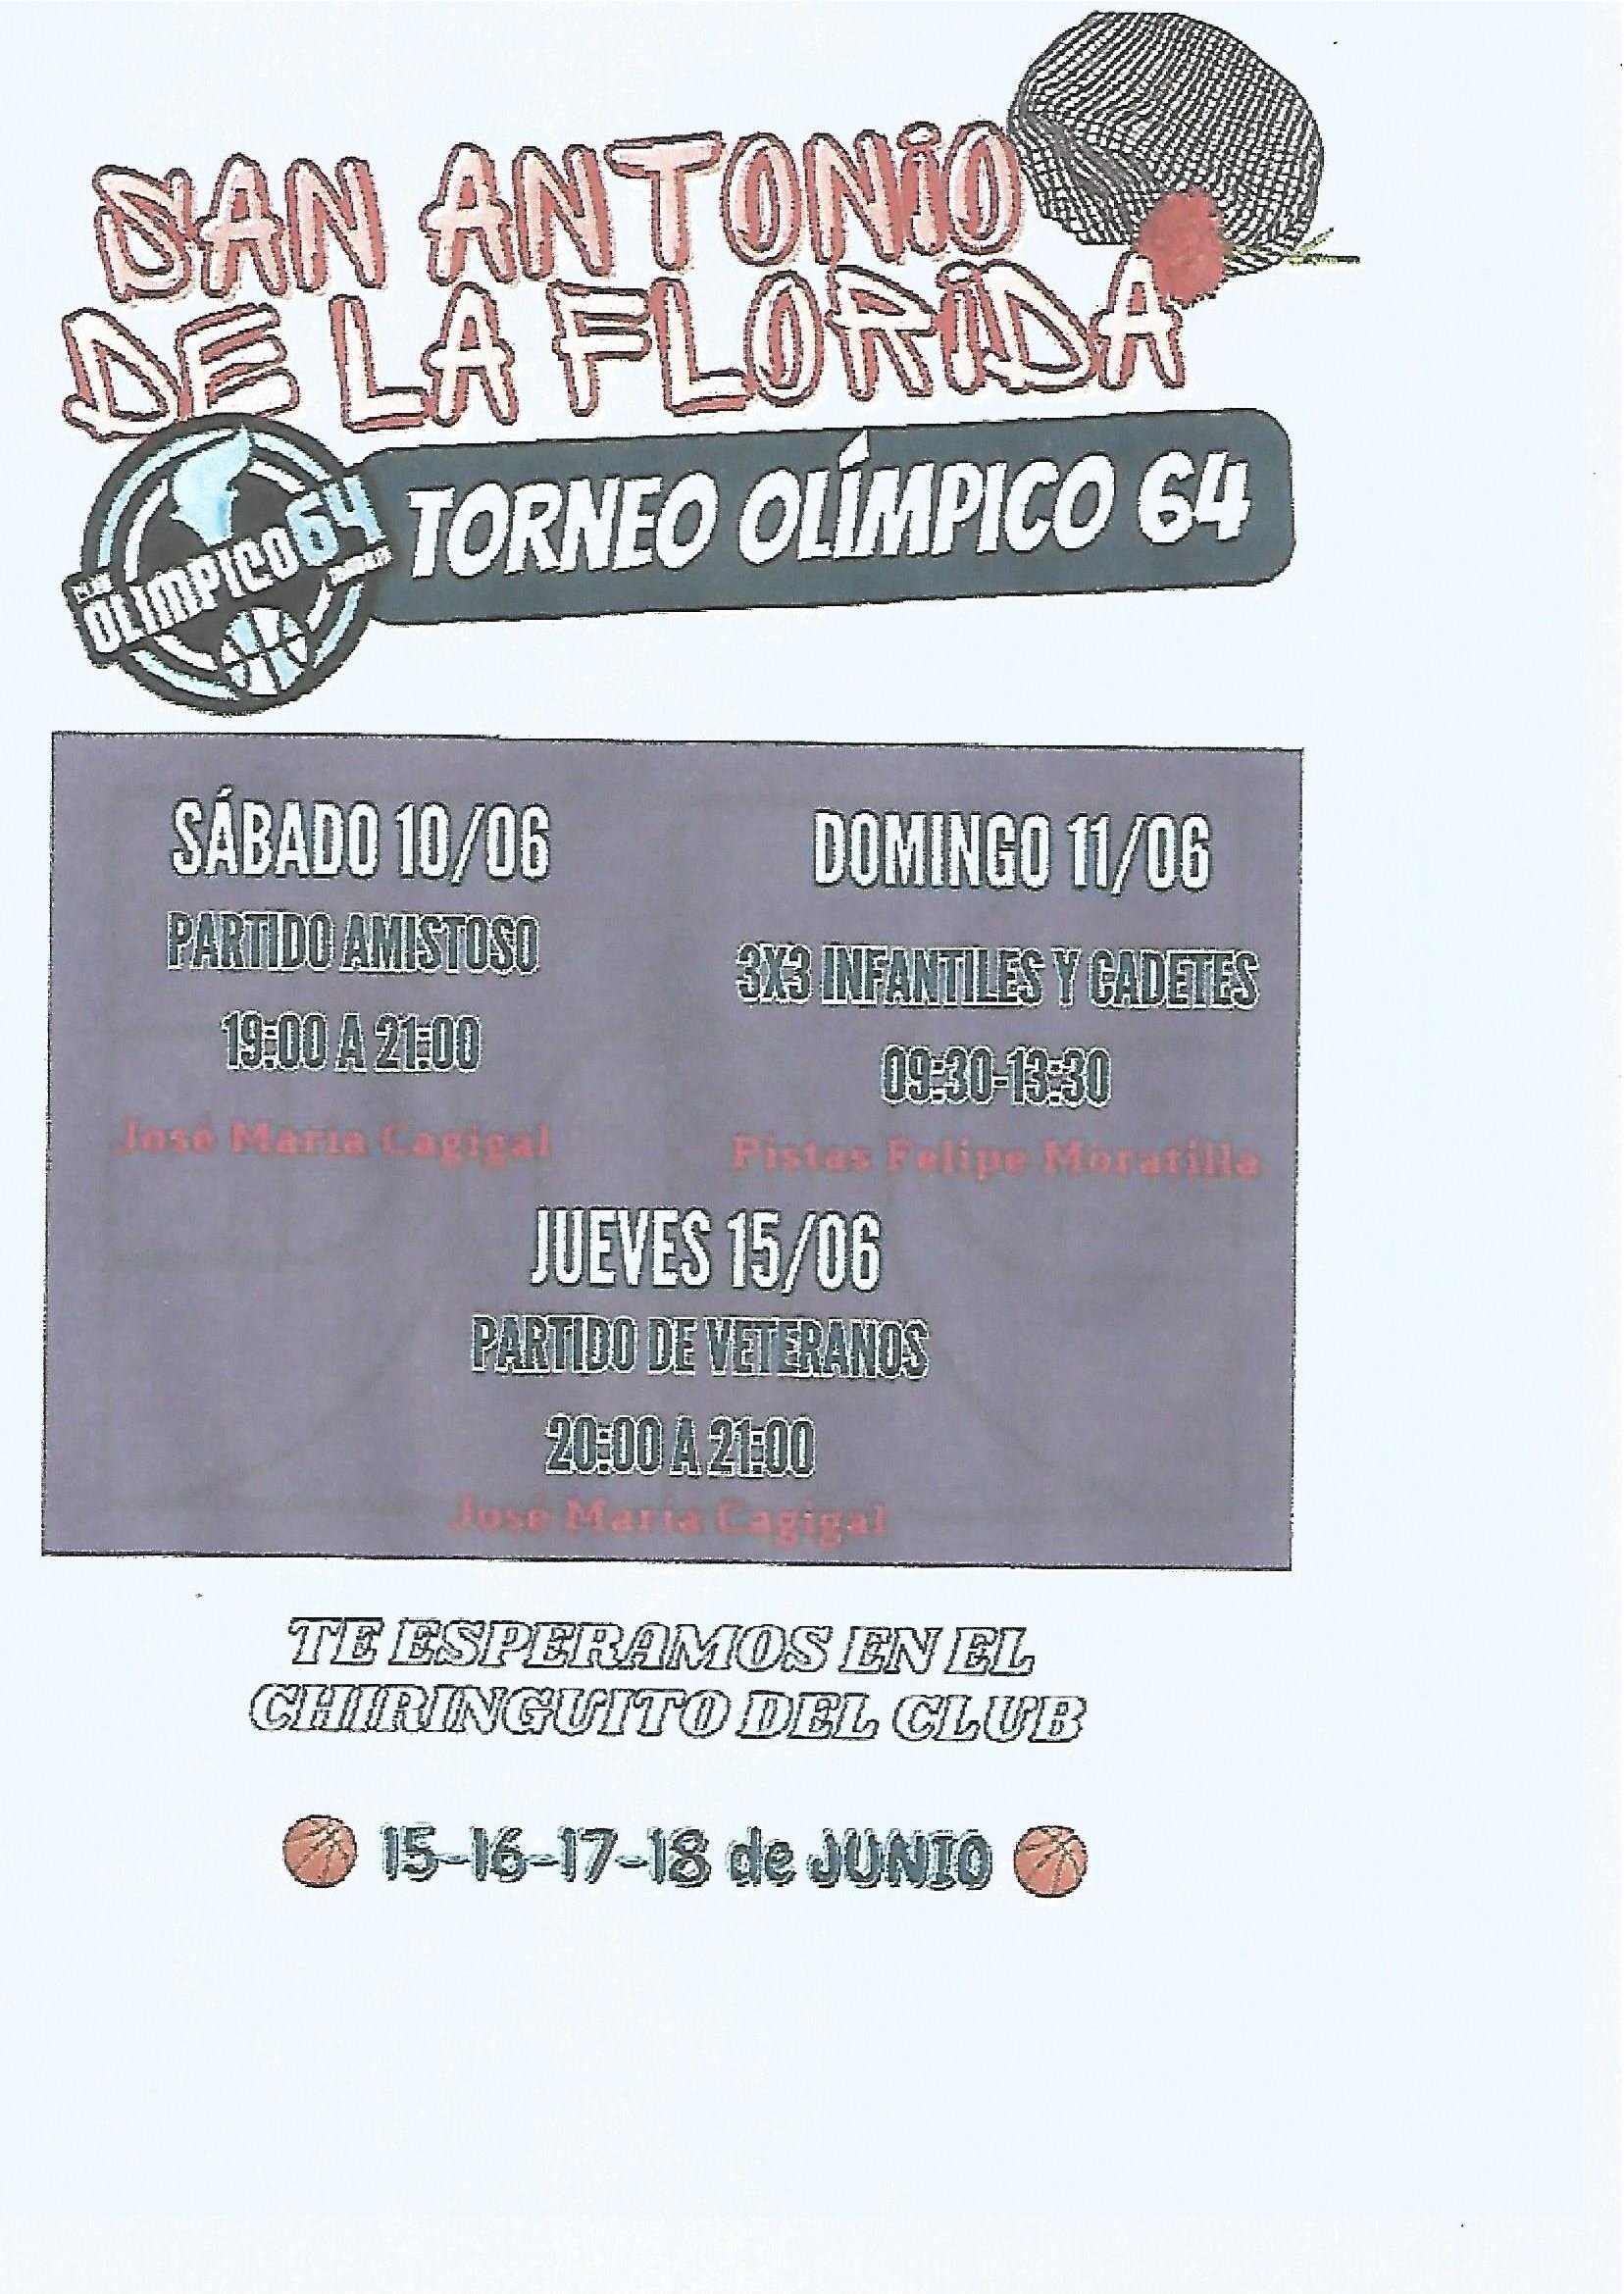 Cartel Torneo Baloncesto S.Antonio